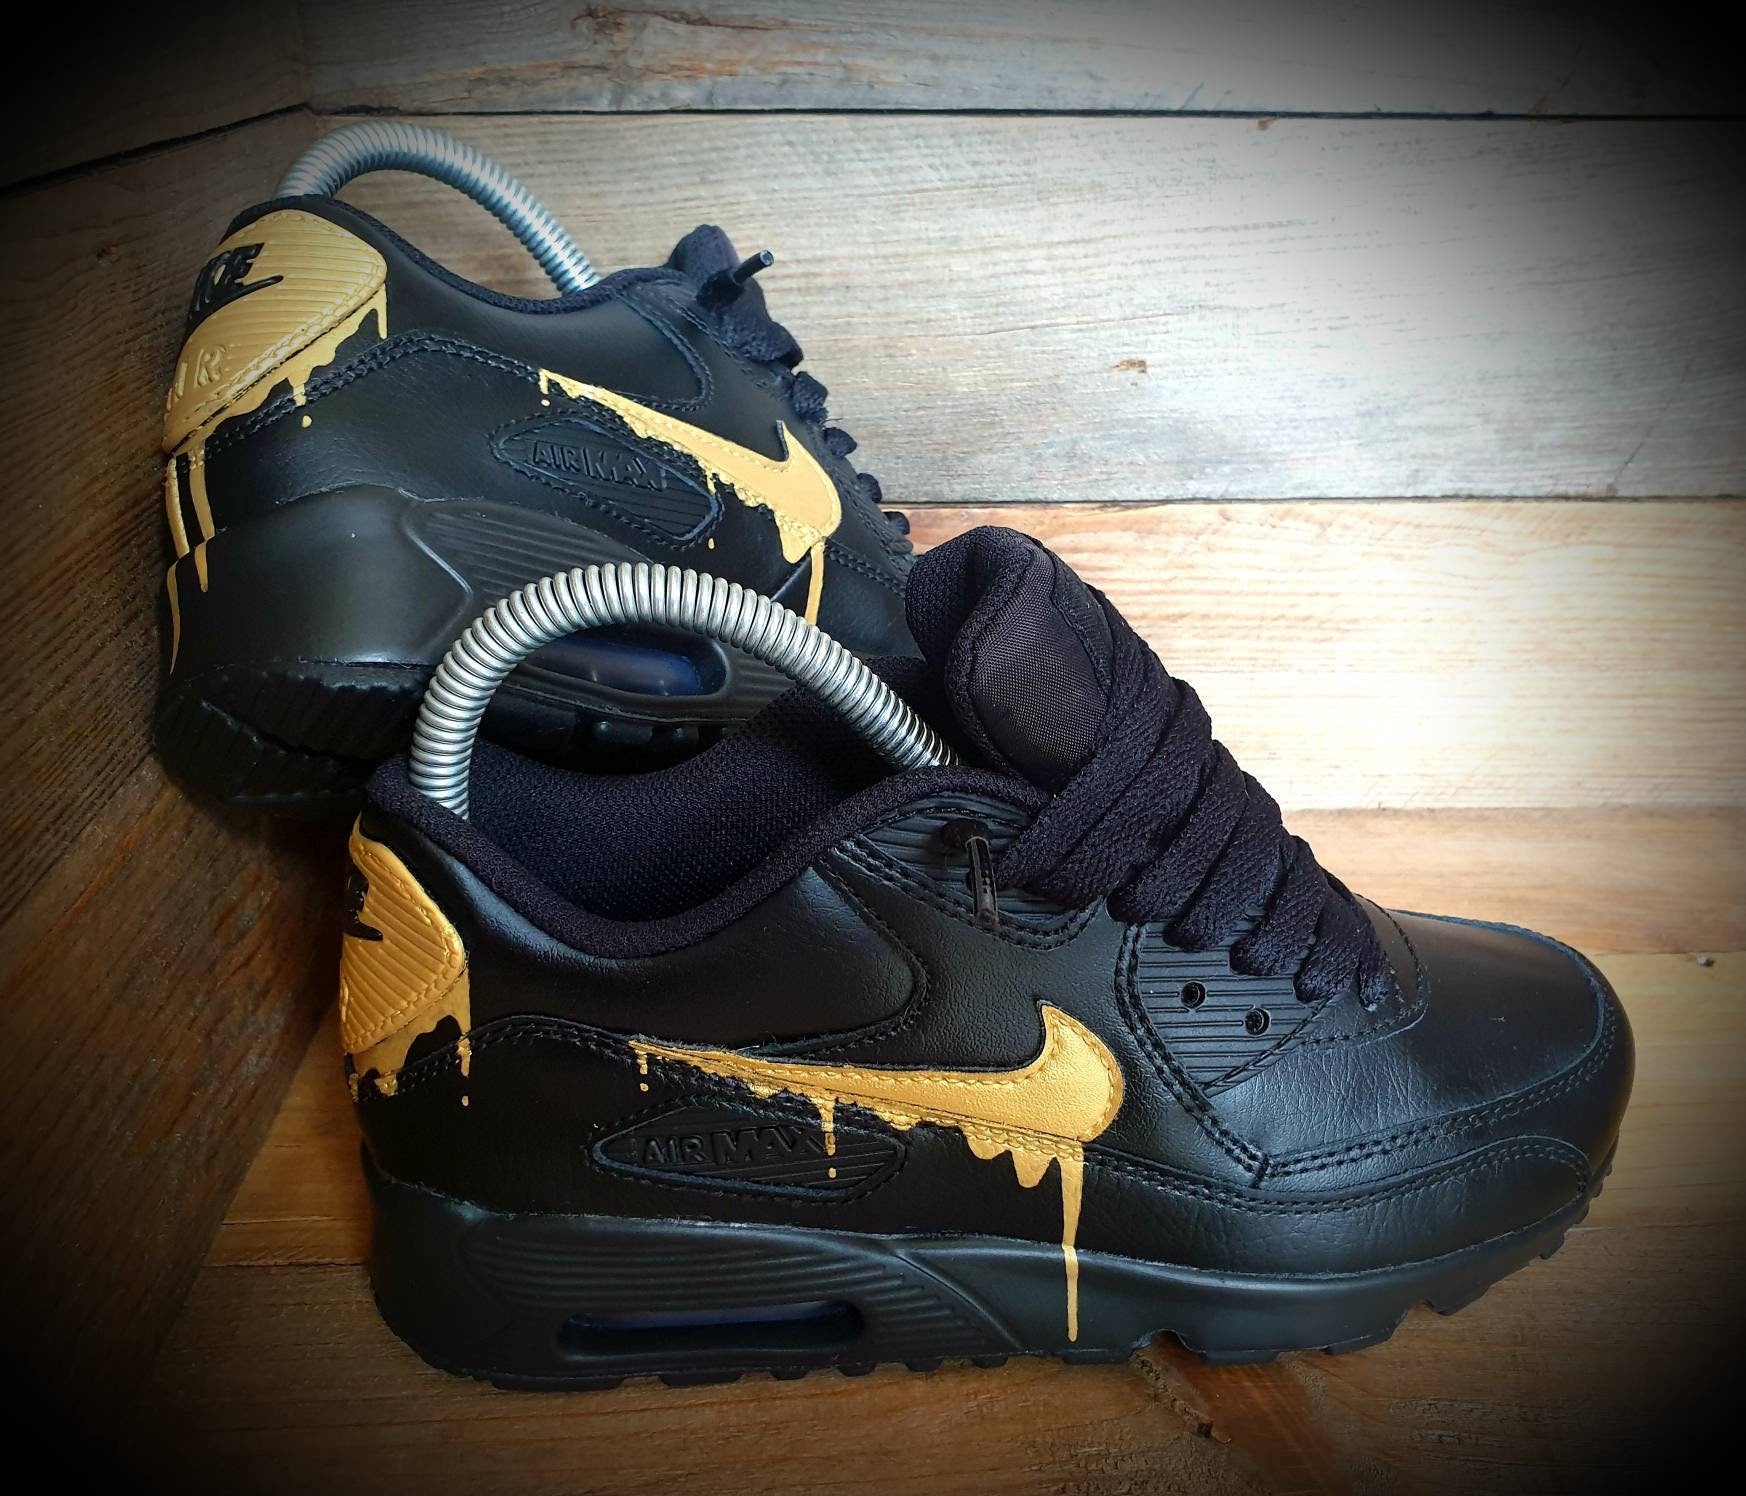 Custom Painted Air Max 90/Sneakers/Shoes/Kicks/Premium/Personalised/Dripping Gold